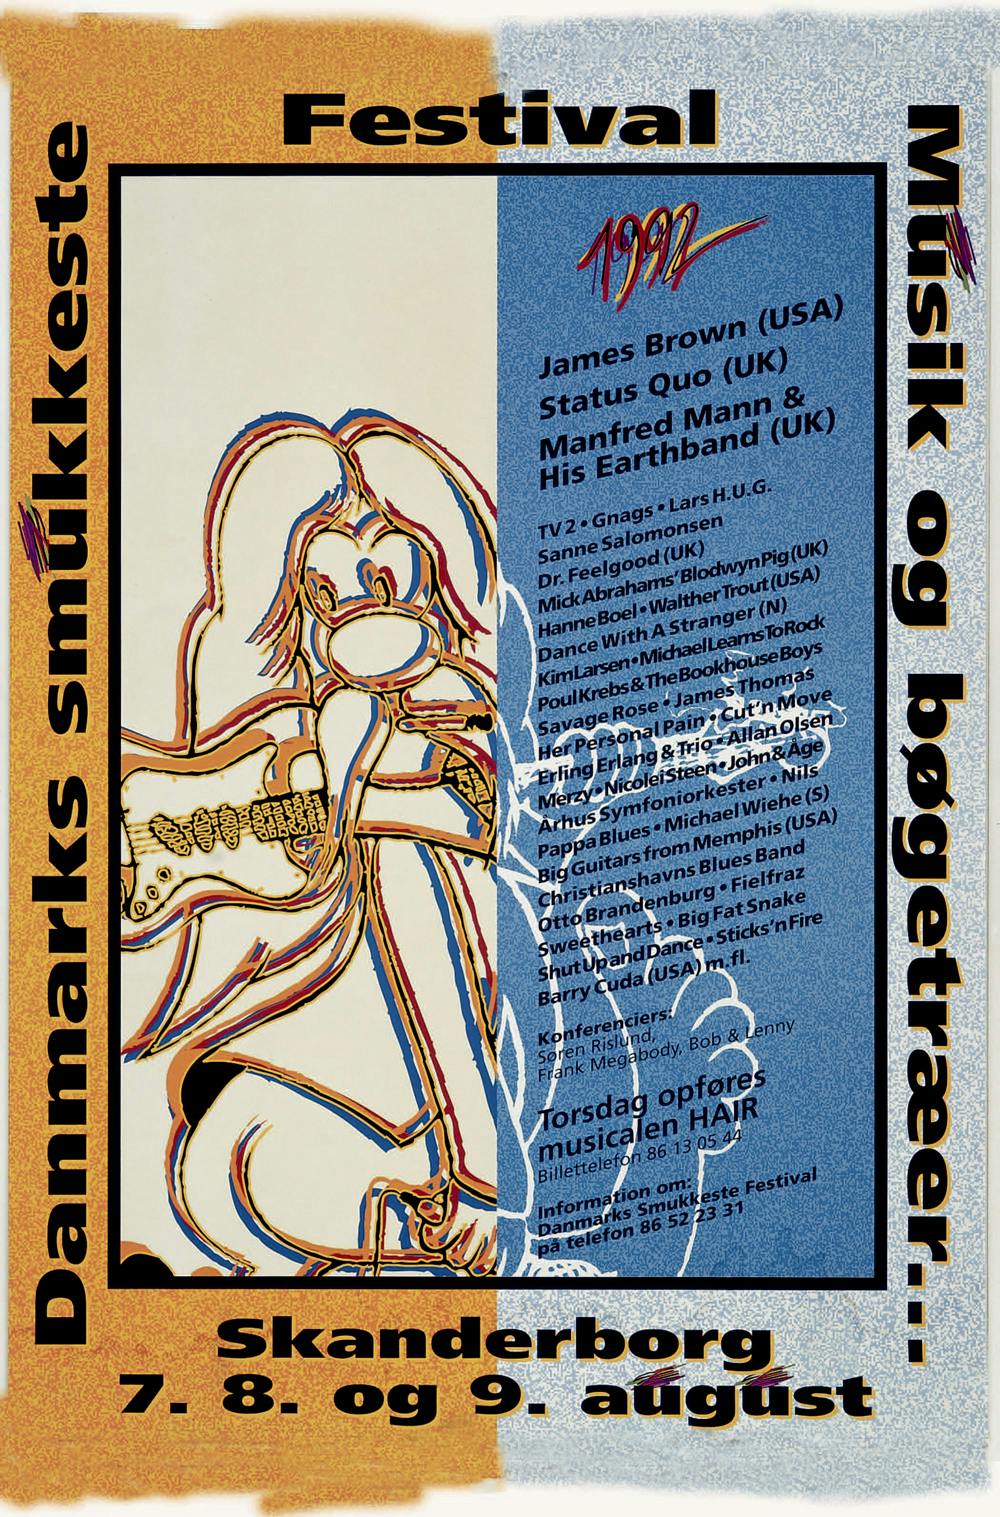 Smukfest 1992 poster